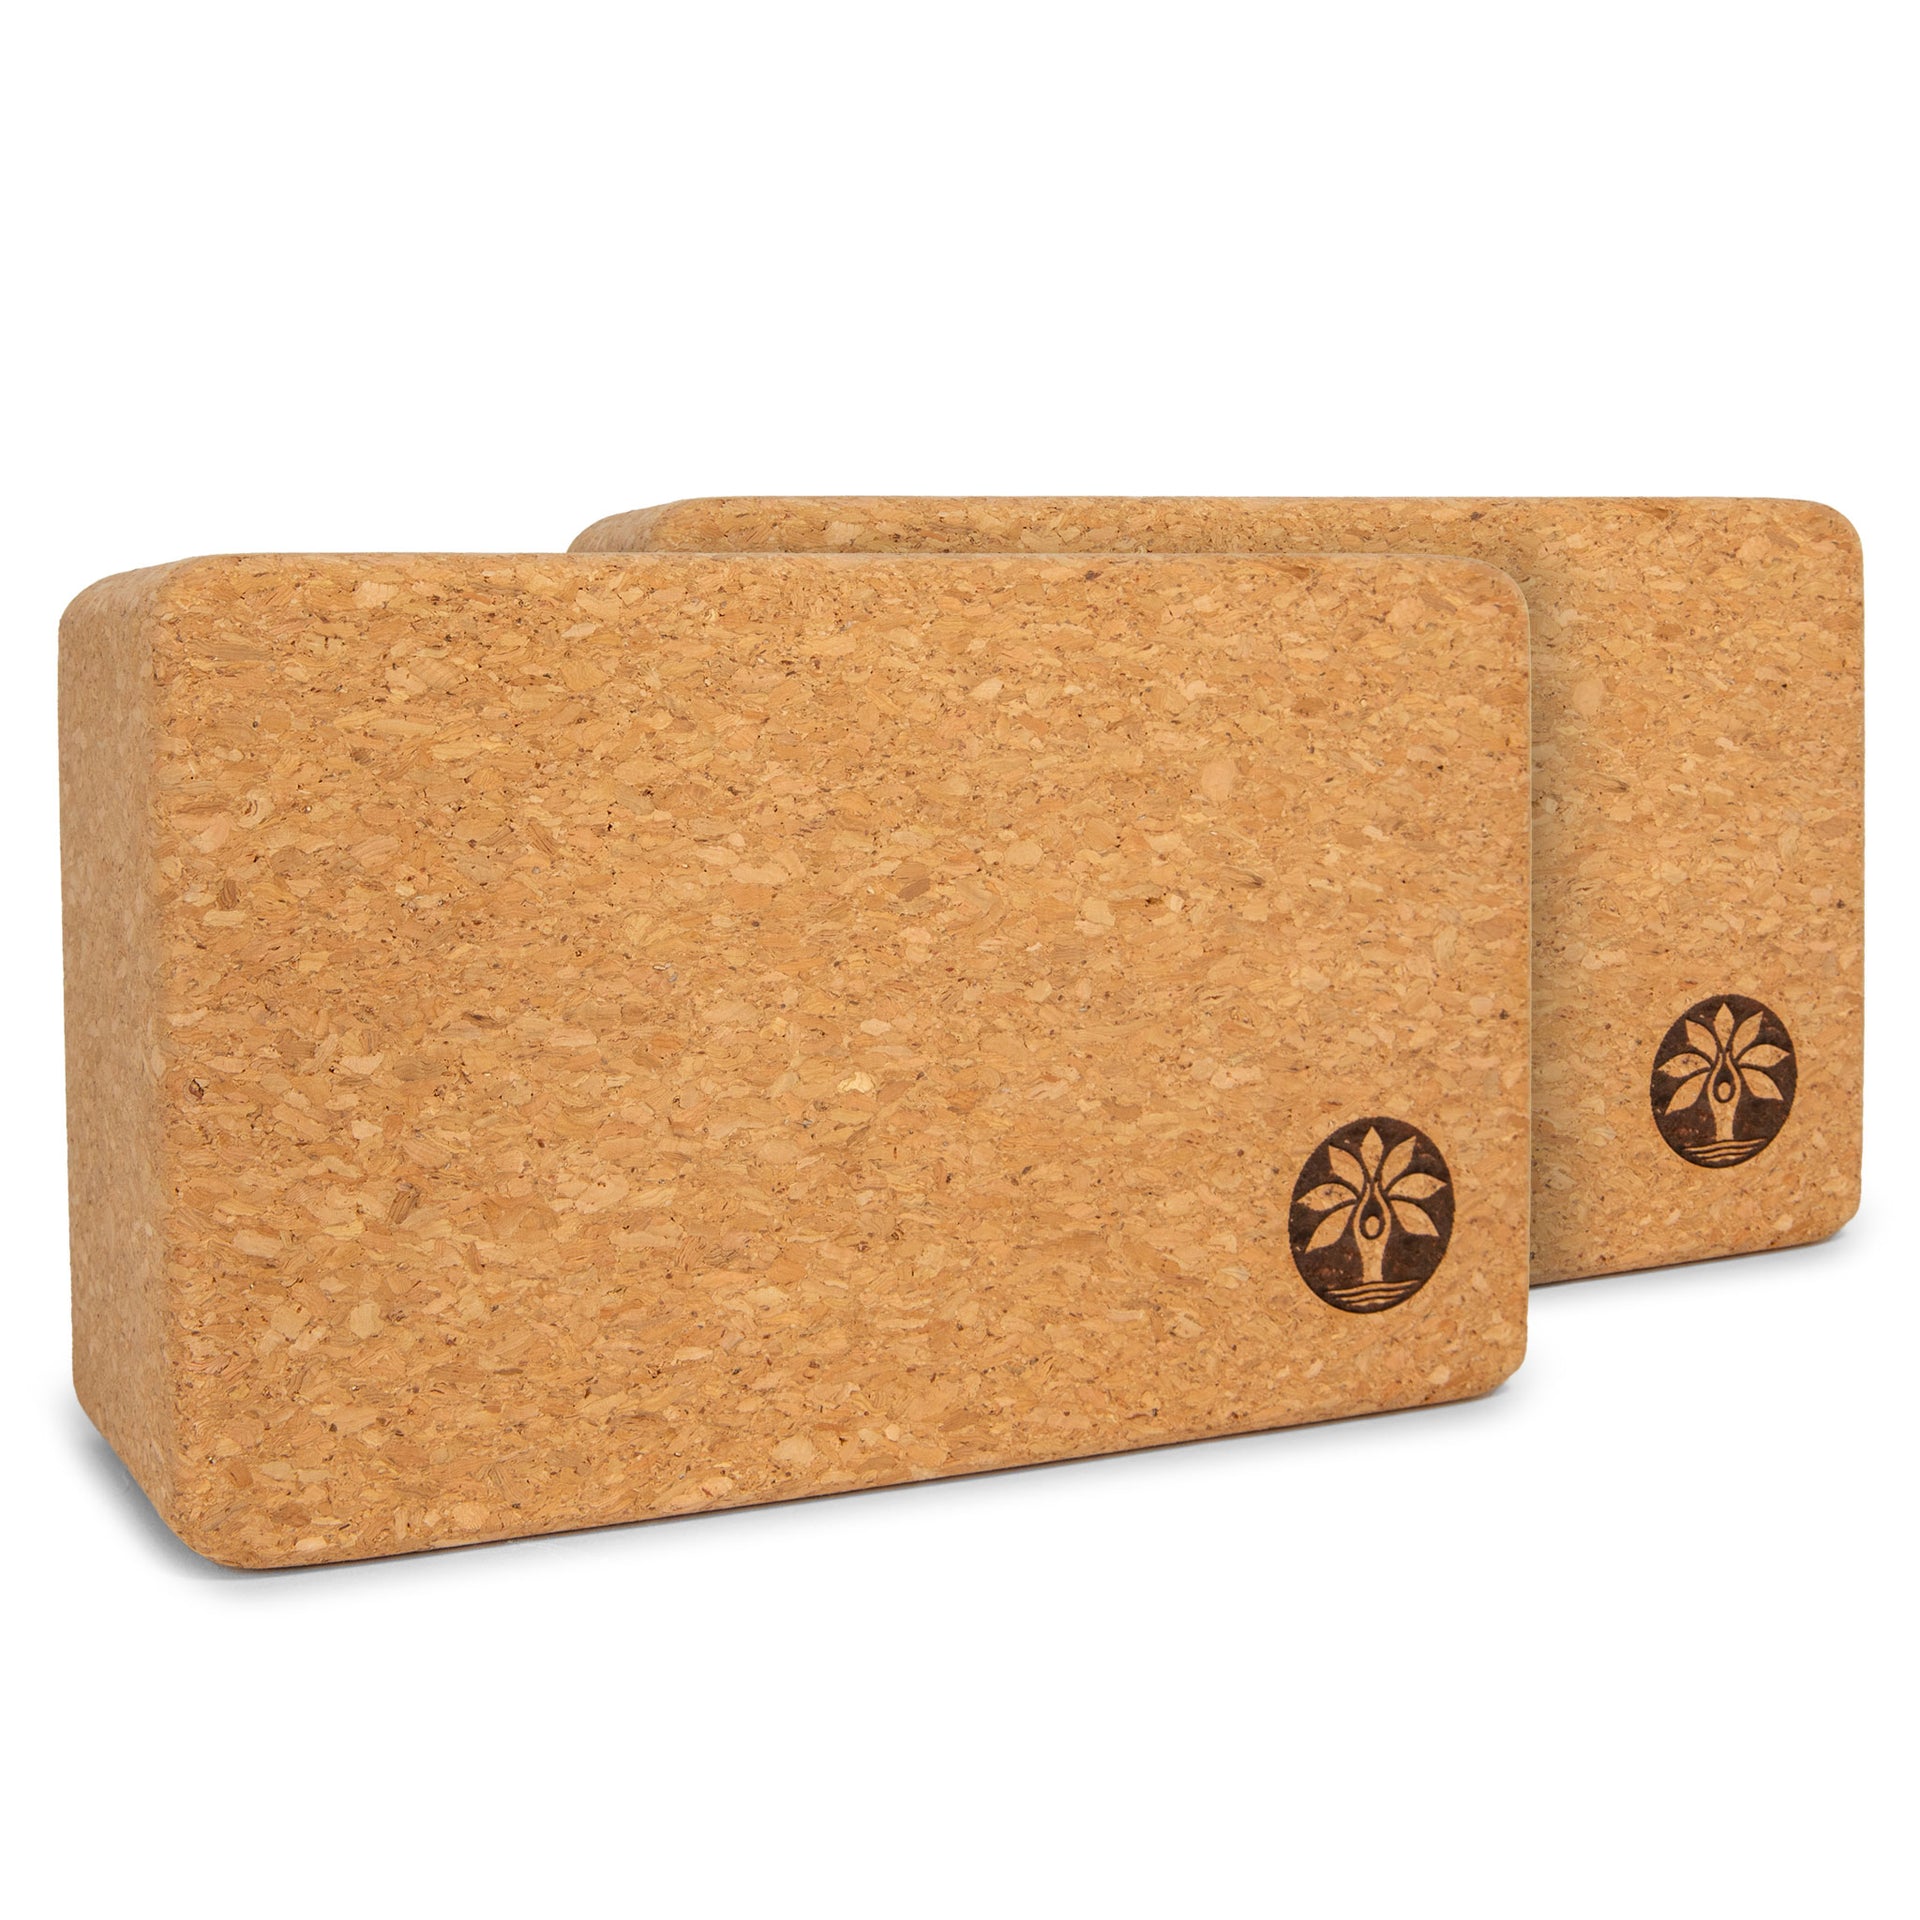 Cork Yoga Block Set of 2 - Enable Nature